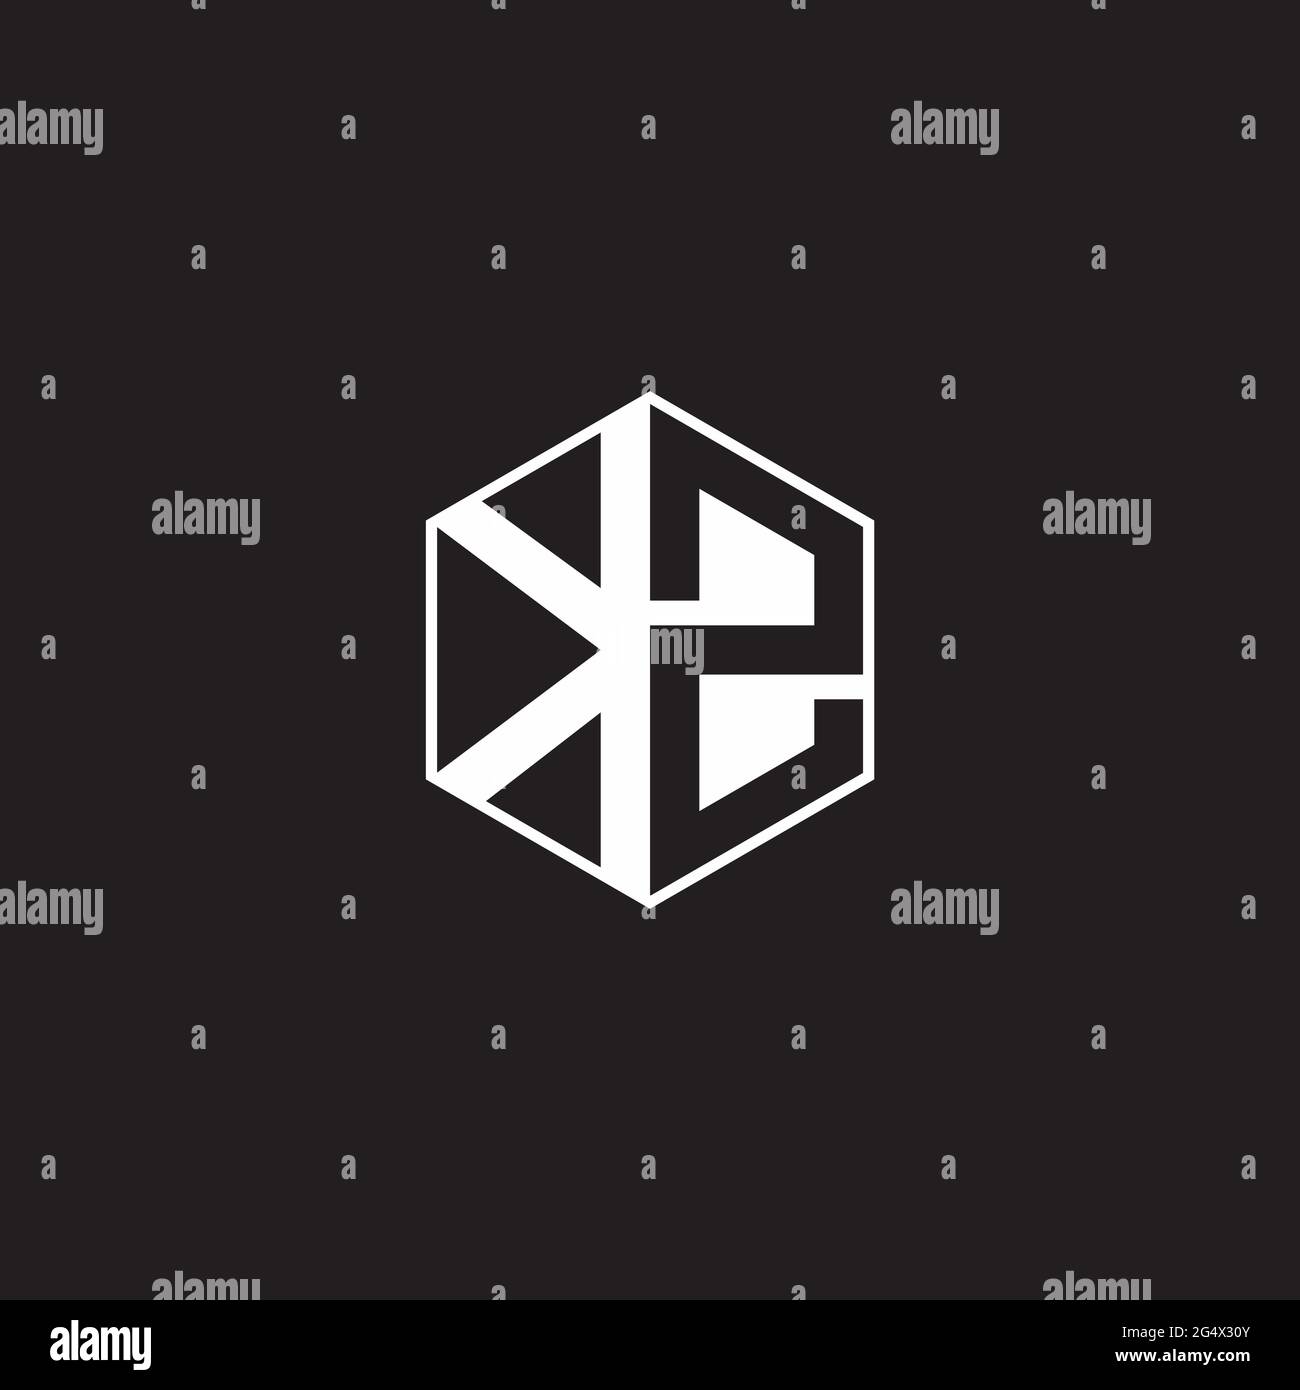 Kz K Z Zk Logo Monogram Hexagon With Black Background Negative Space Style Stock Vector Image